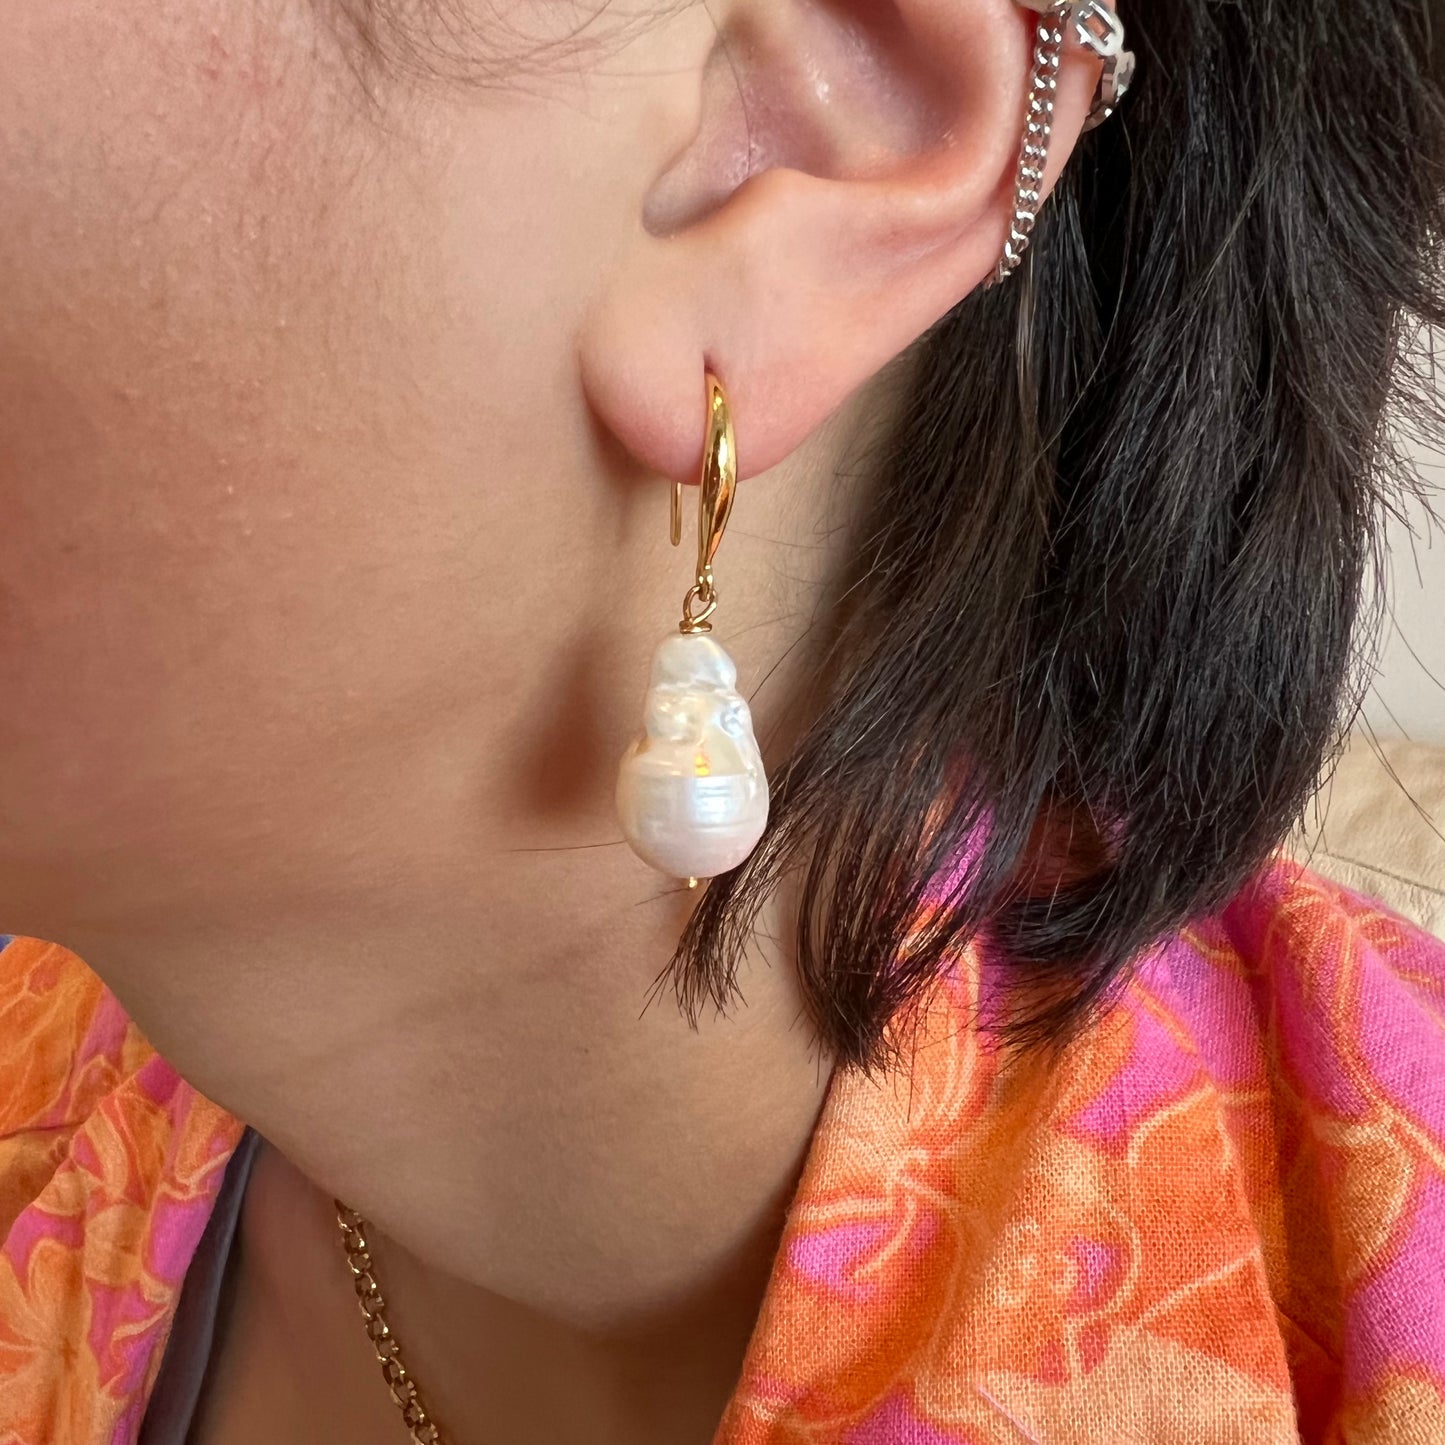 Amy Baroque Pearl Earrings